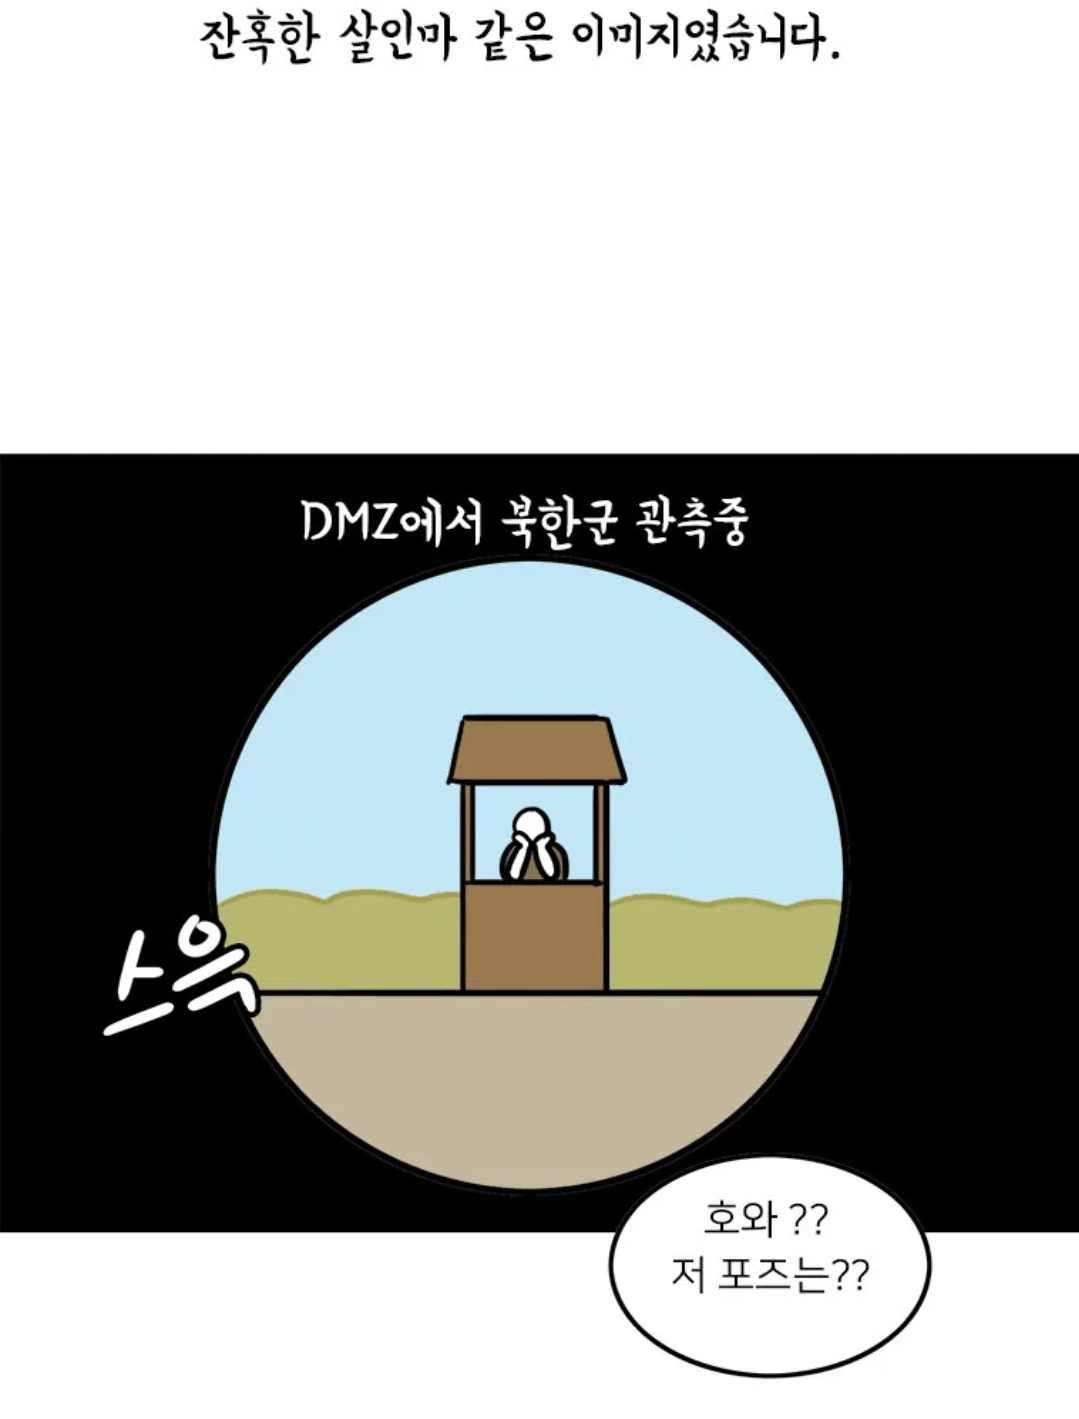 North Korean military observation log cartoon.